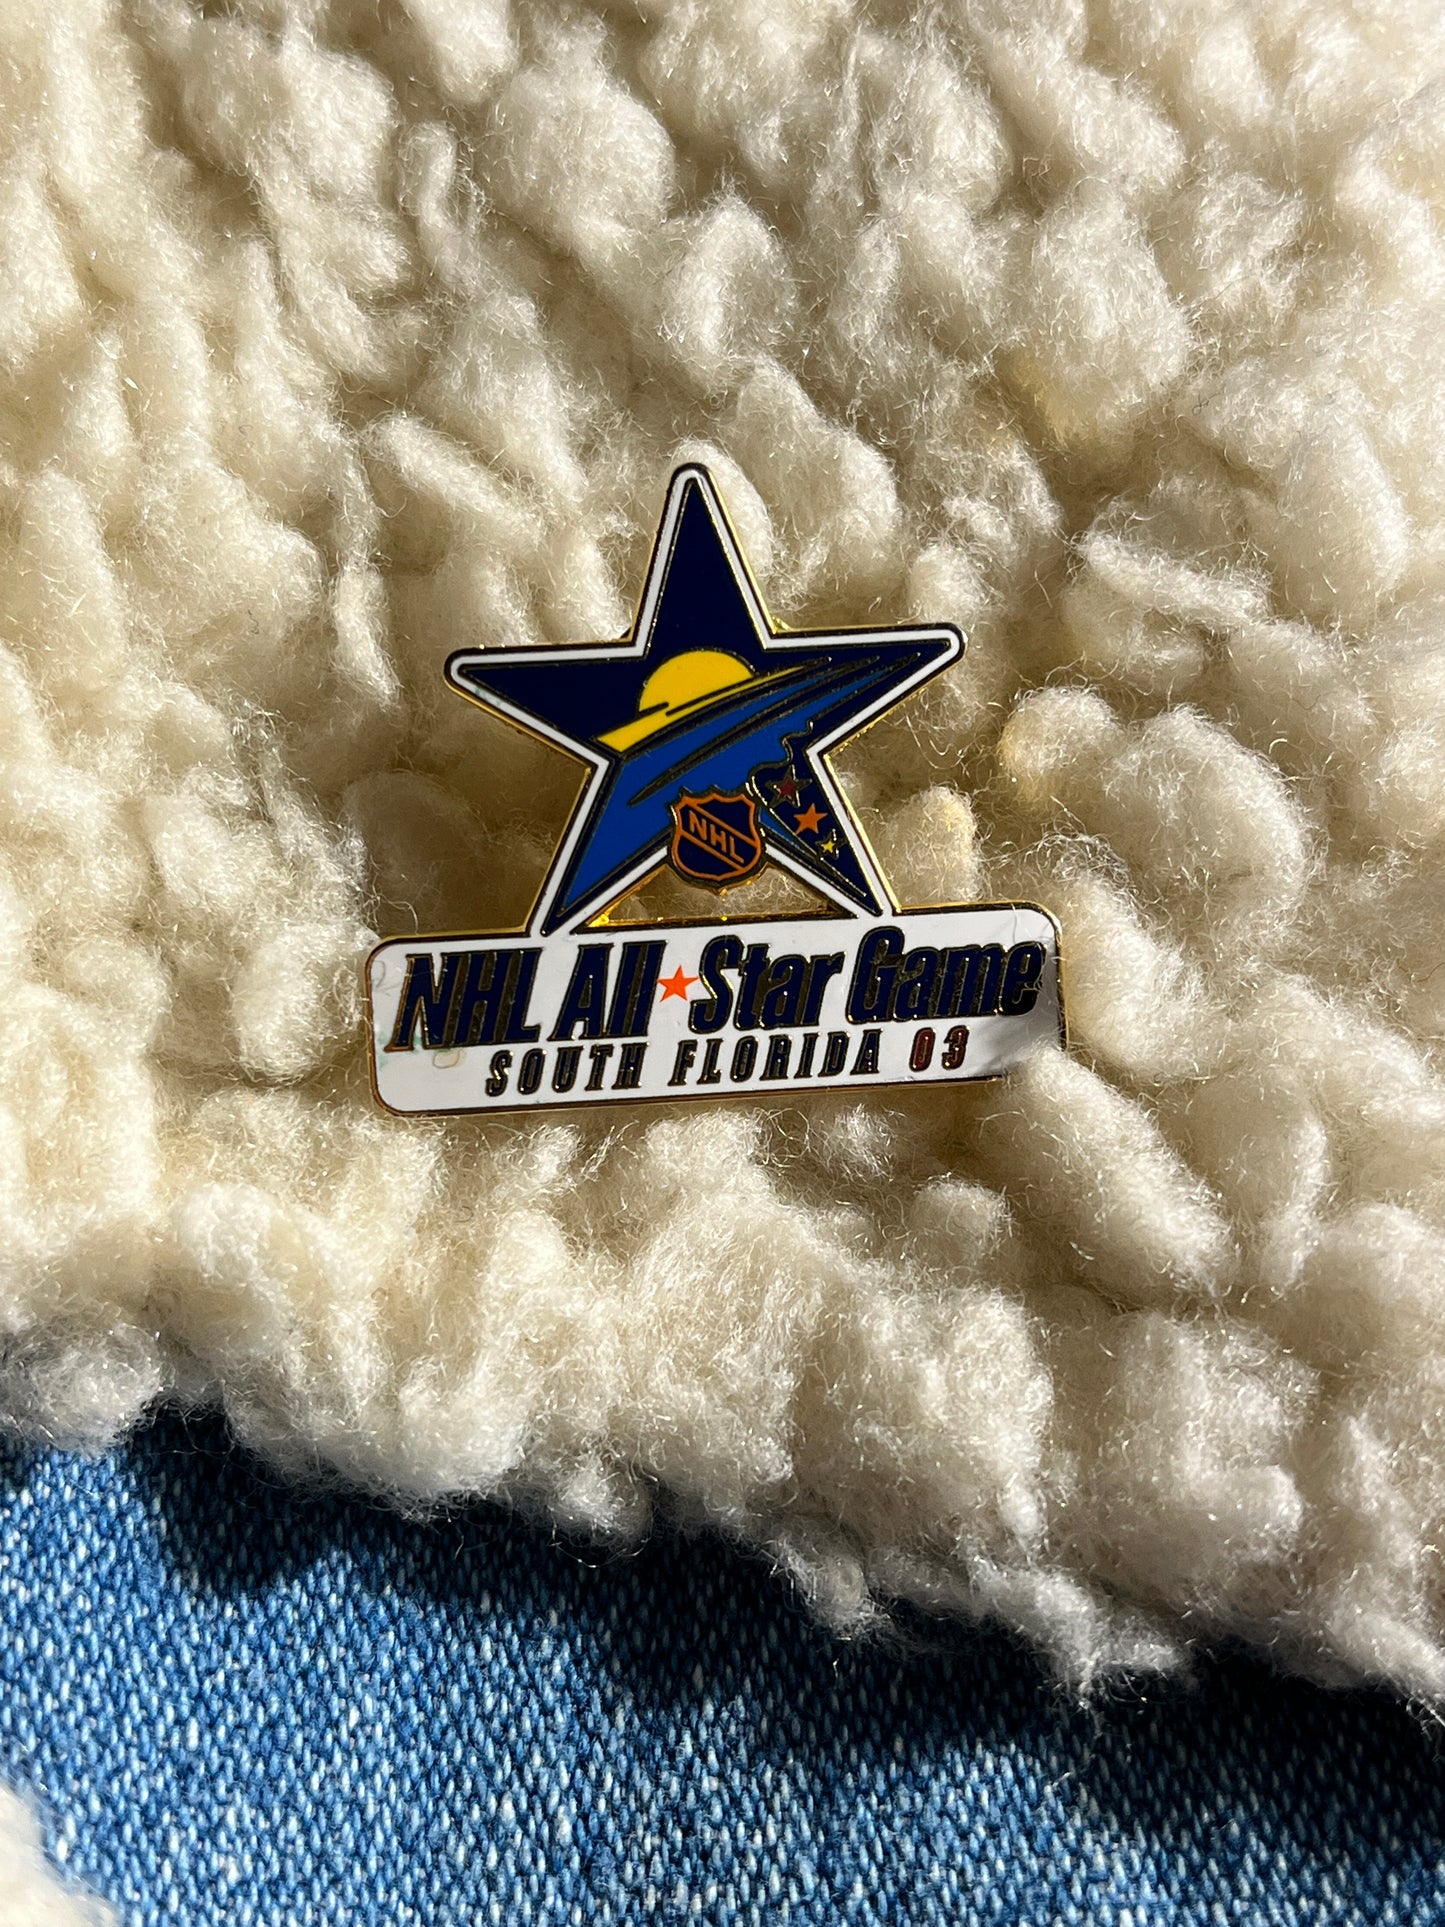 Vintage NHL All Star Game Metal Pin